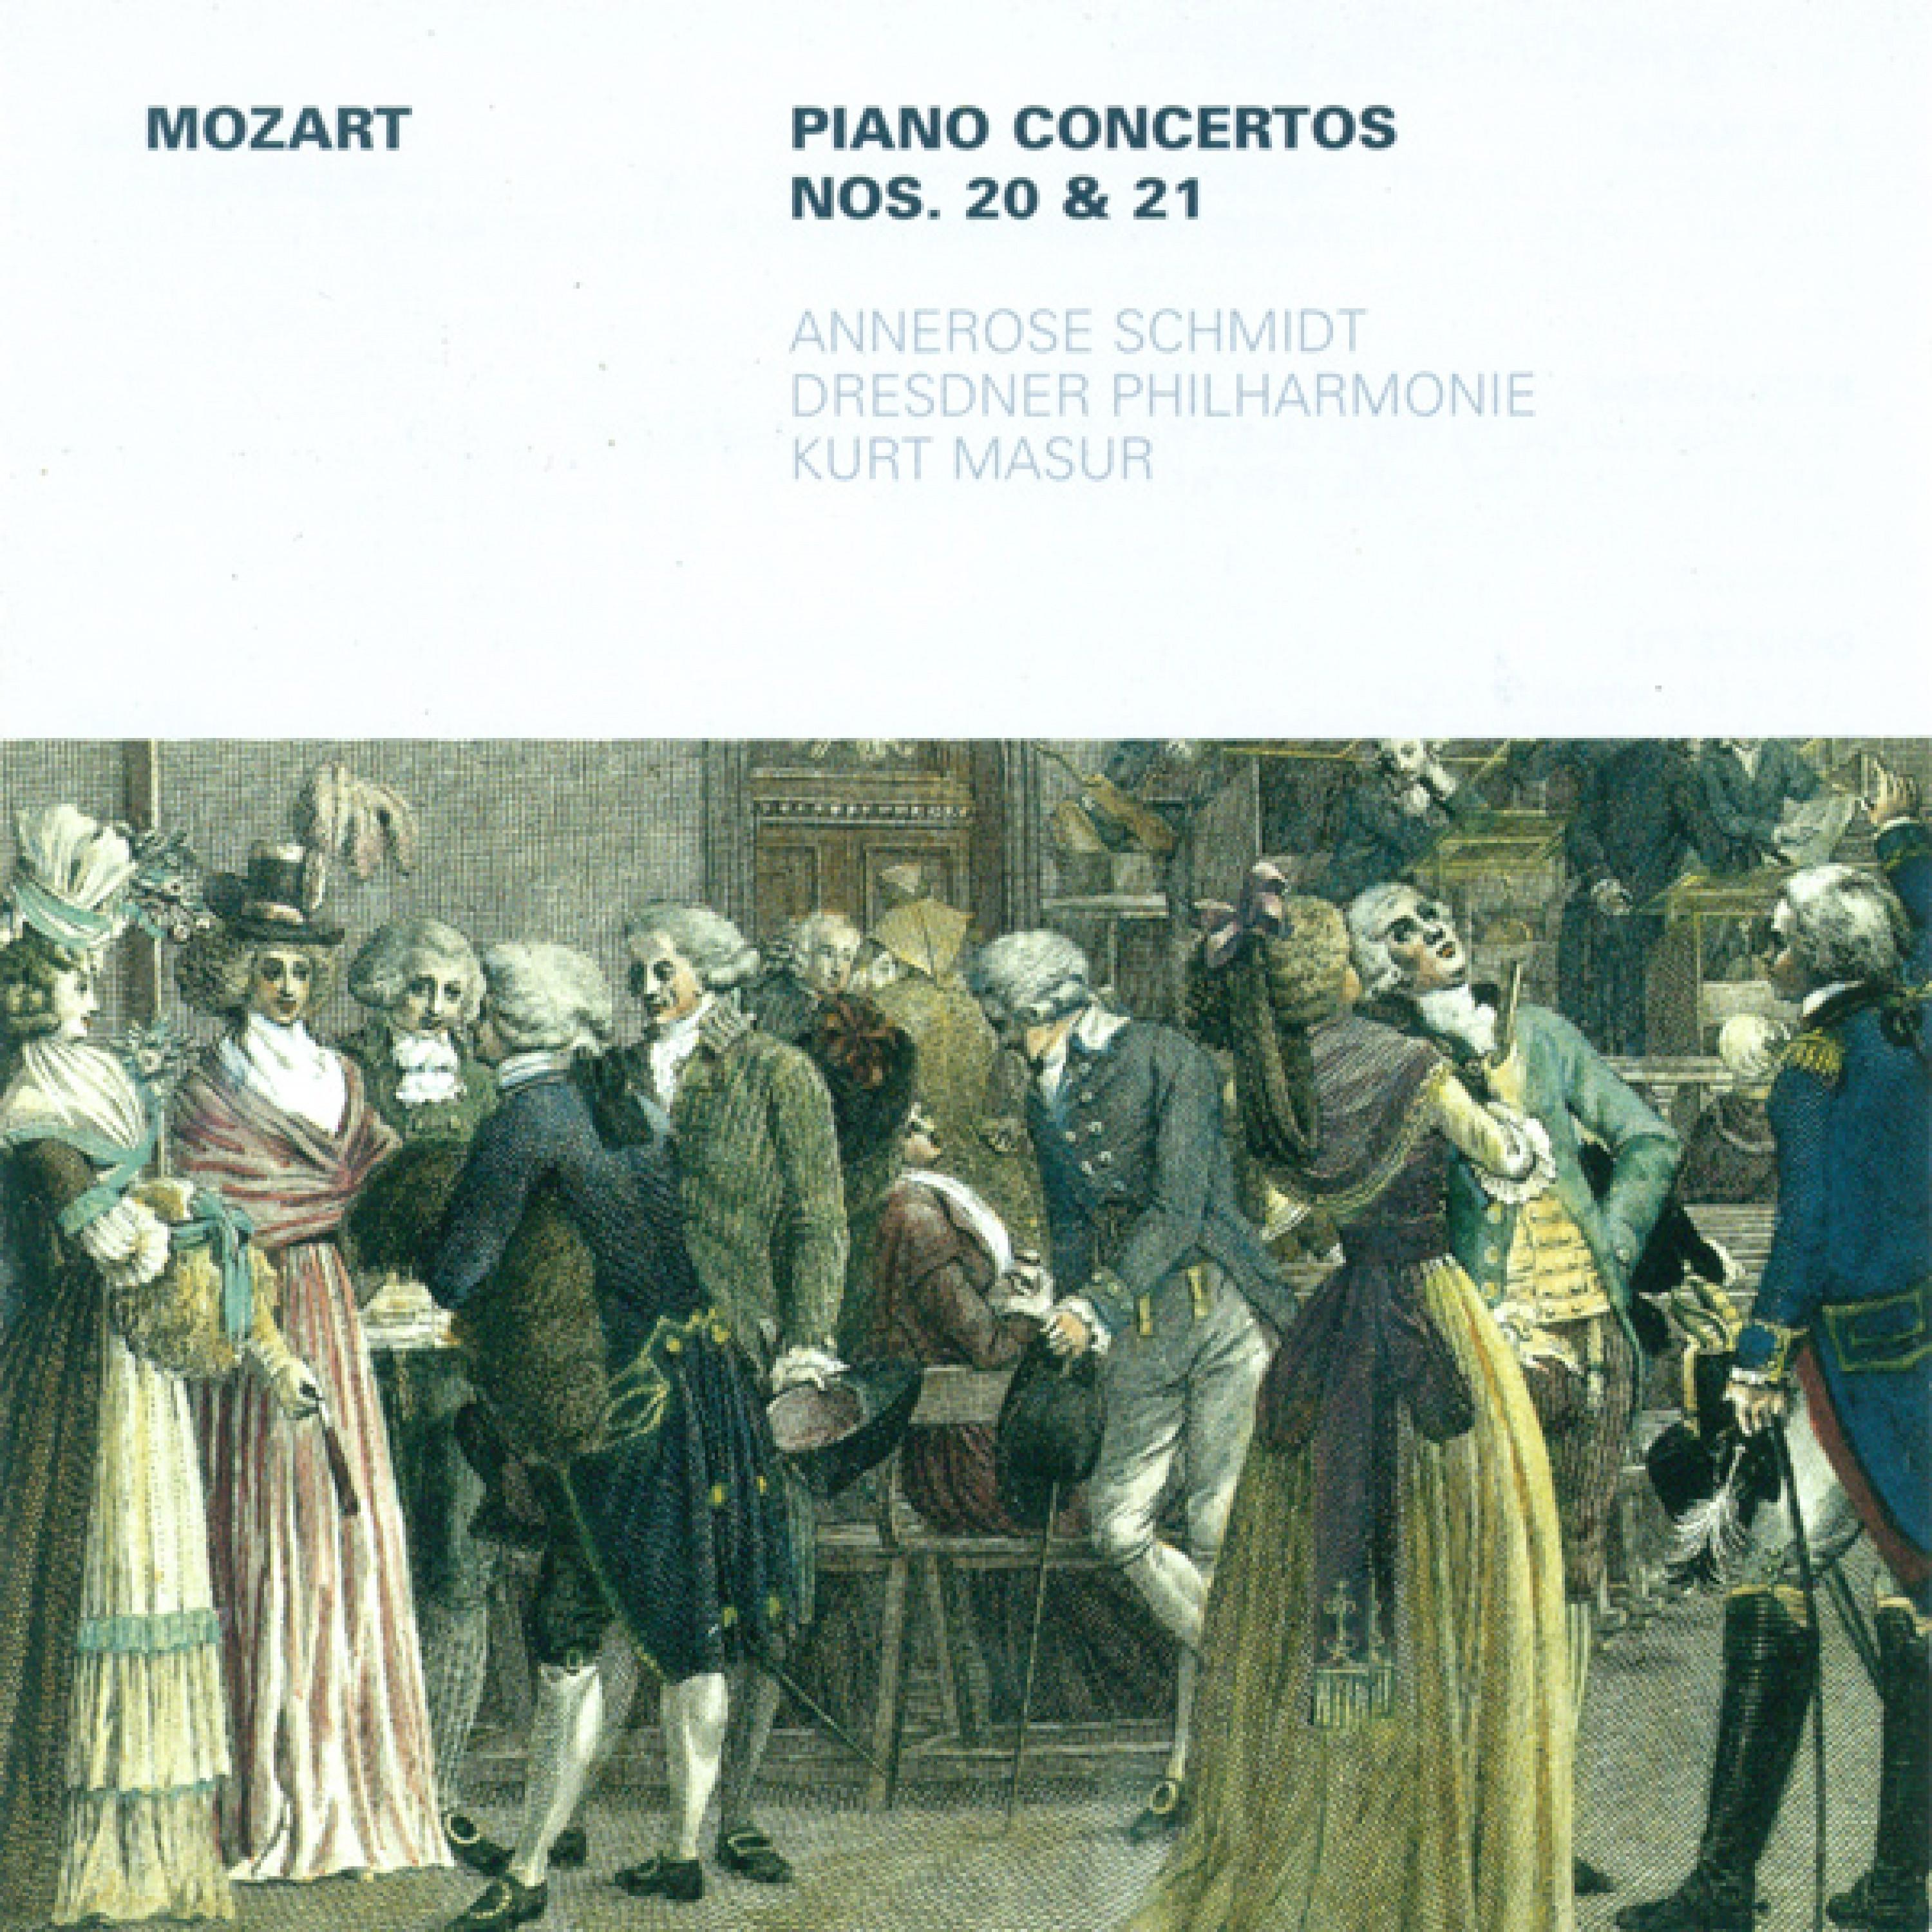 Wolfgang Amadeus Mozart: Piano Concertos Nos. 20 and 21 (Schmidt, Dresden Philharmonic, Masur)